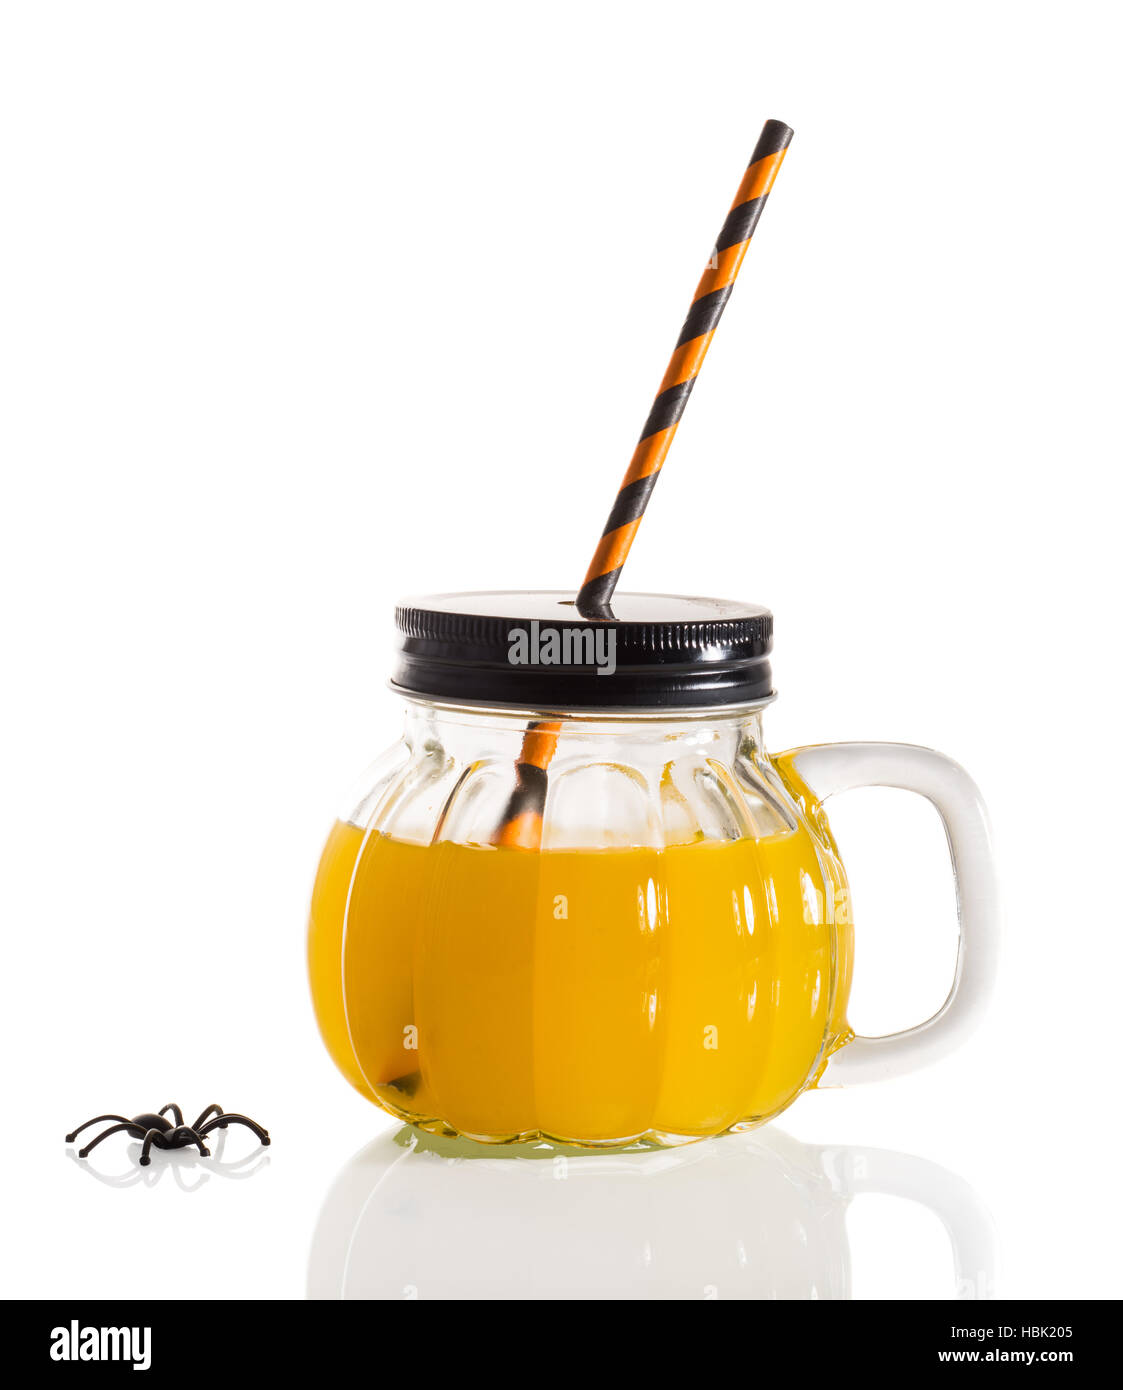 https://c8.alamy.com/comp/HBK205/halloween-drink-served-in-pumpkin-shaped-glass-with-drinking-straw-HBK205.jpg